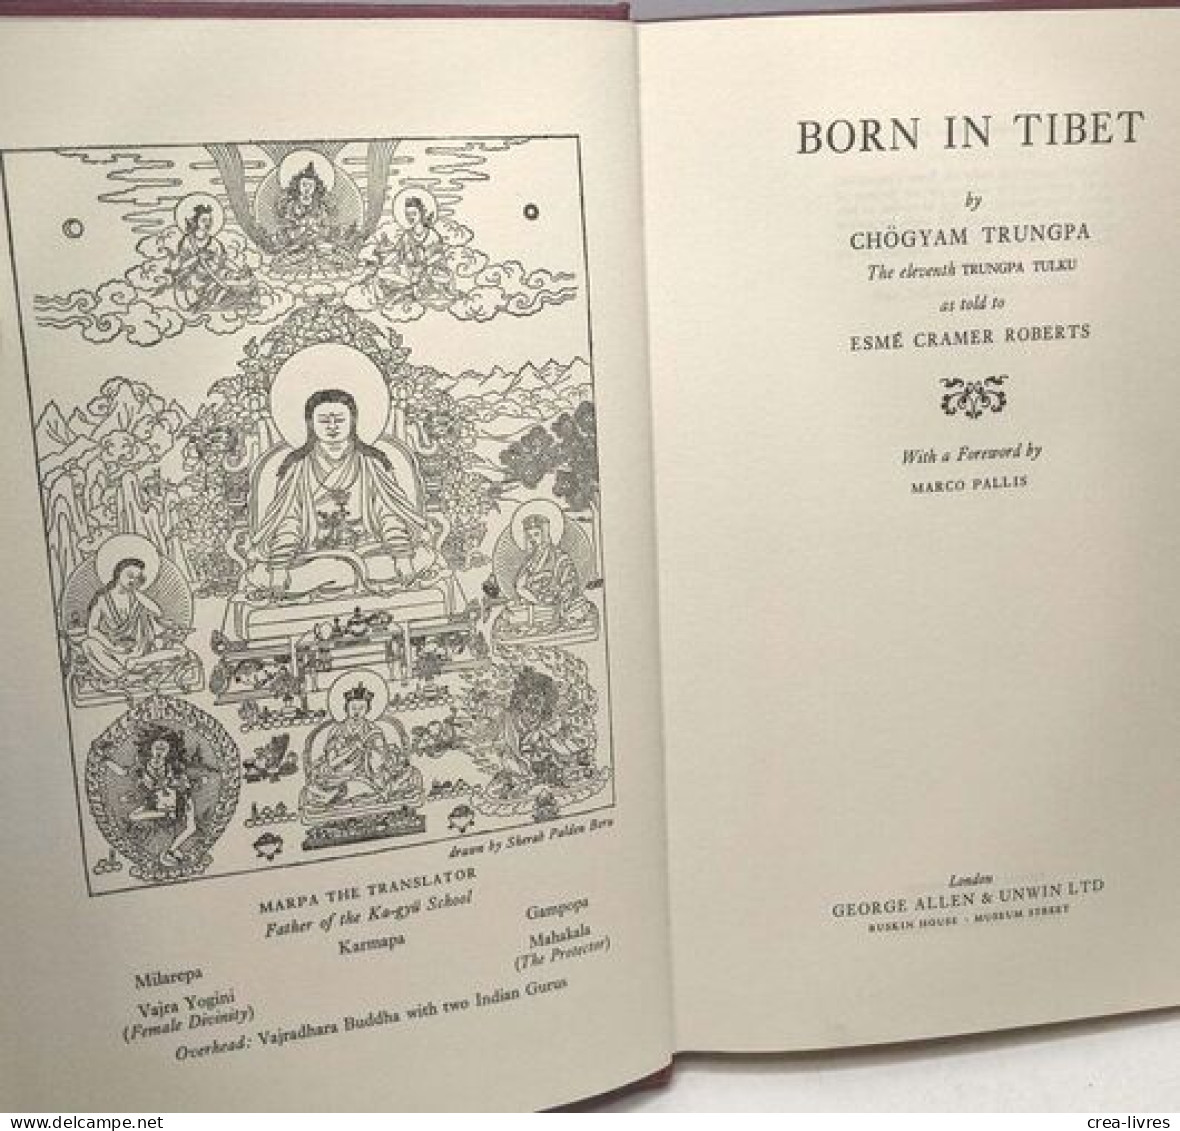 Born In Tibet - Biographie